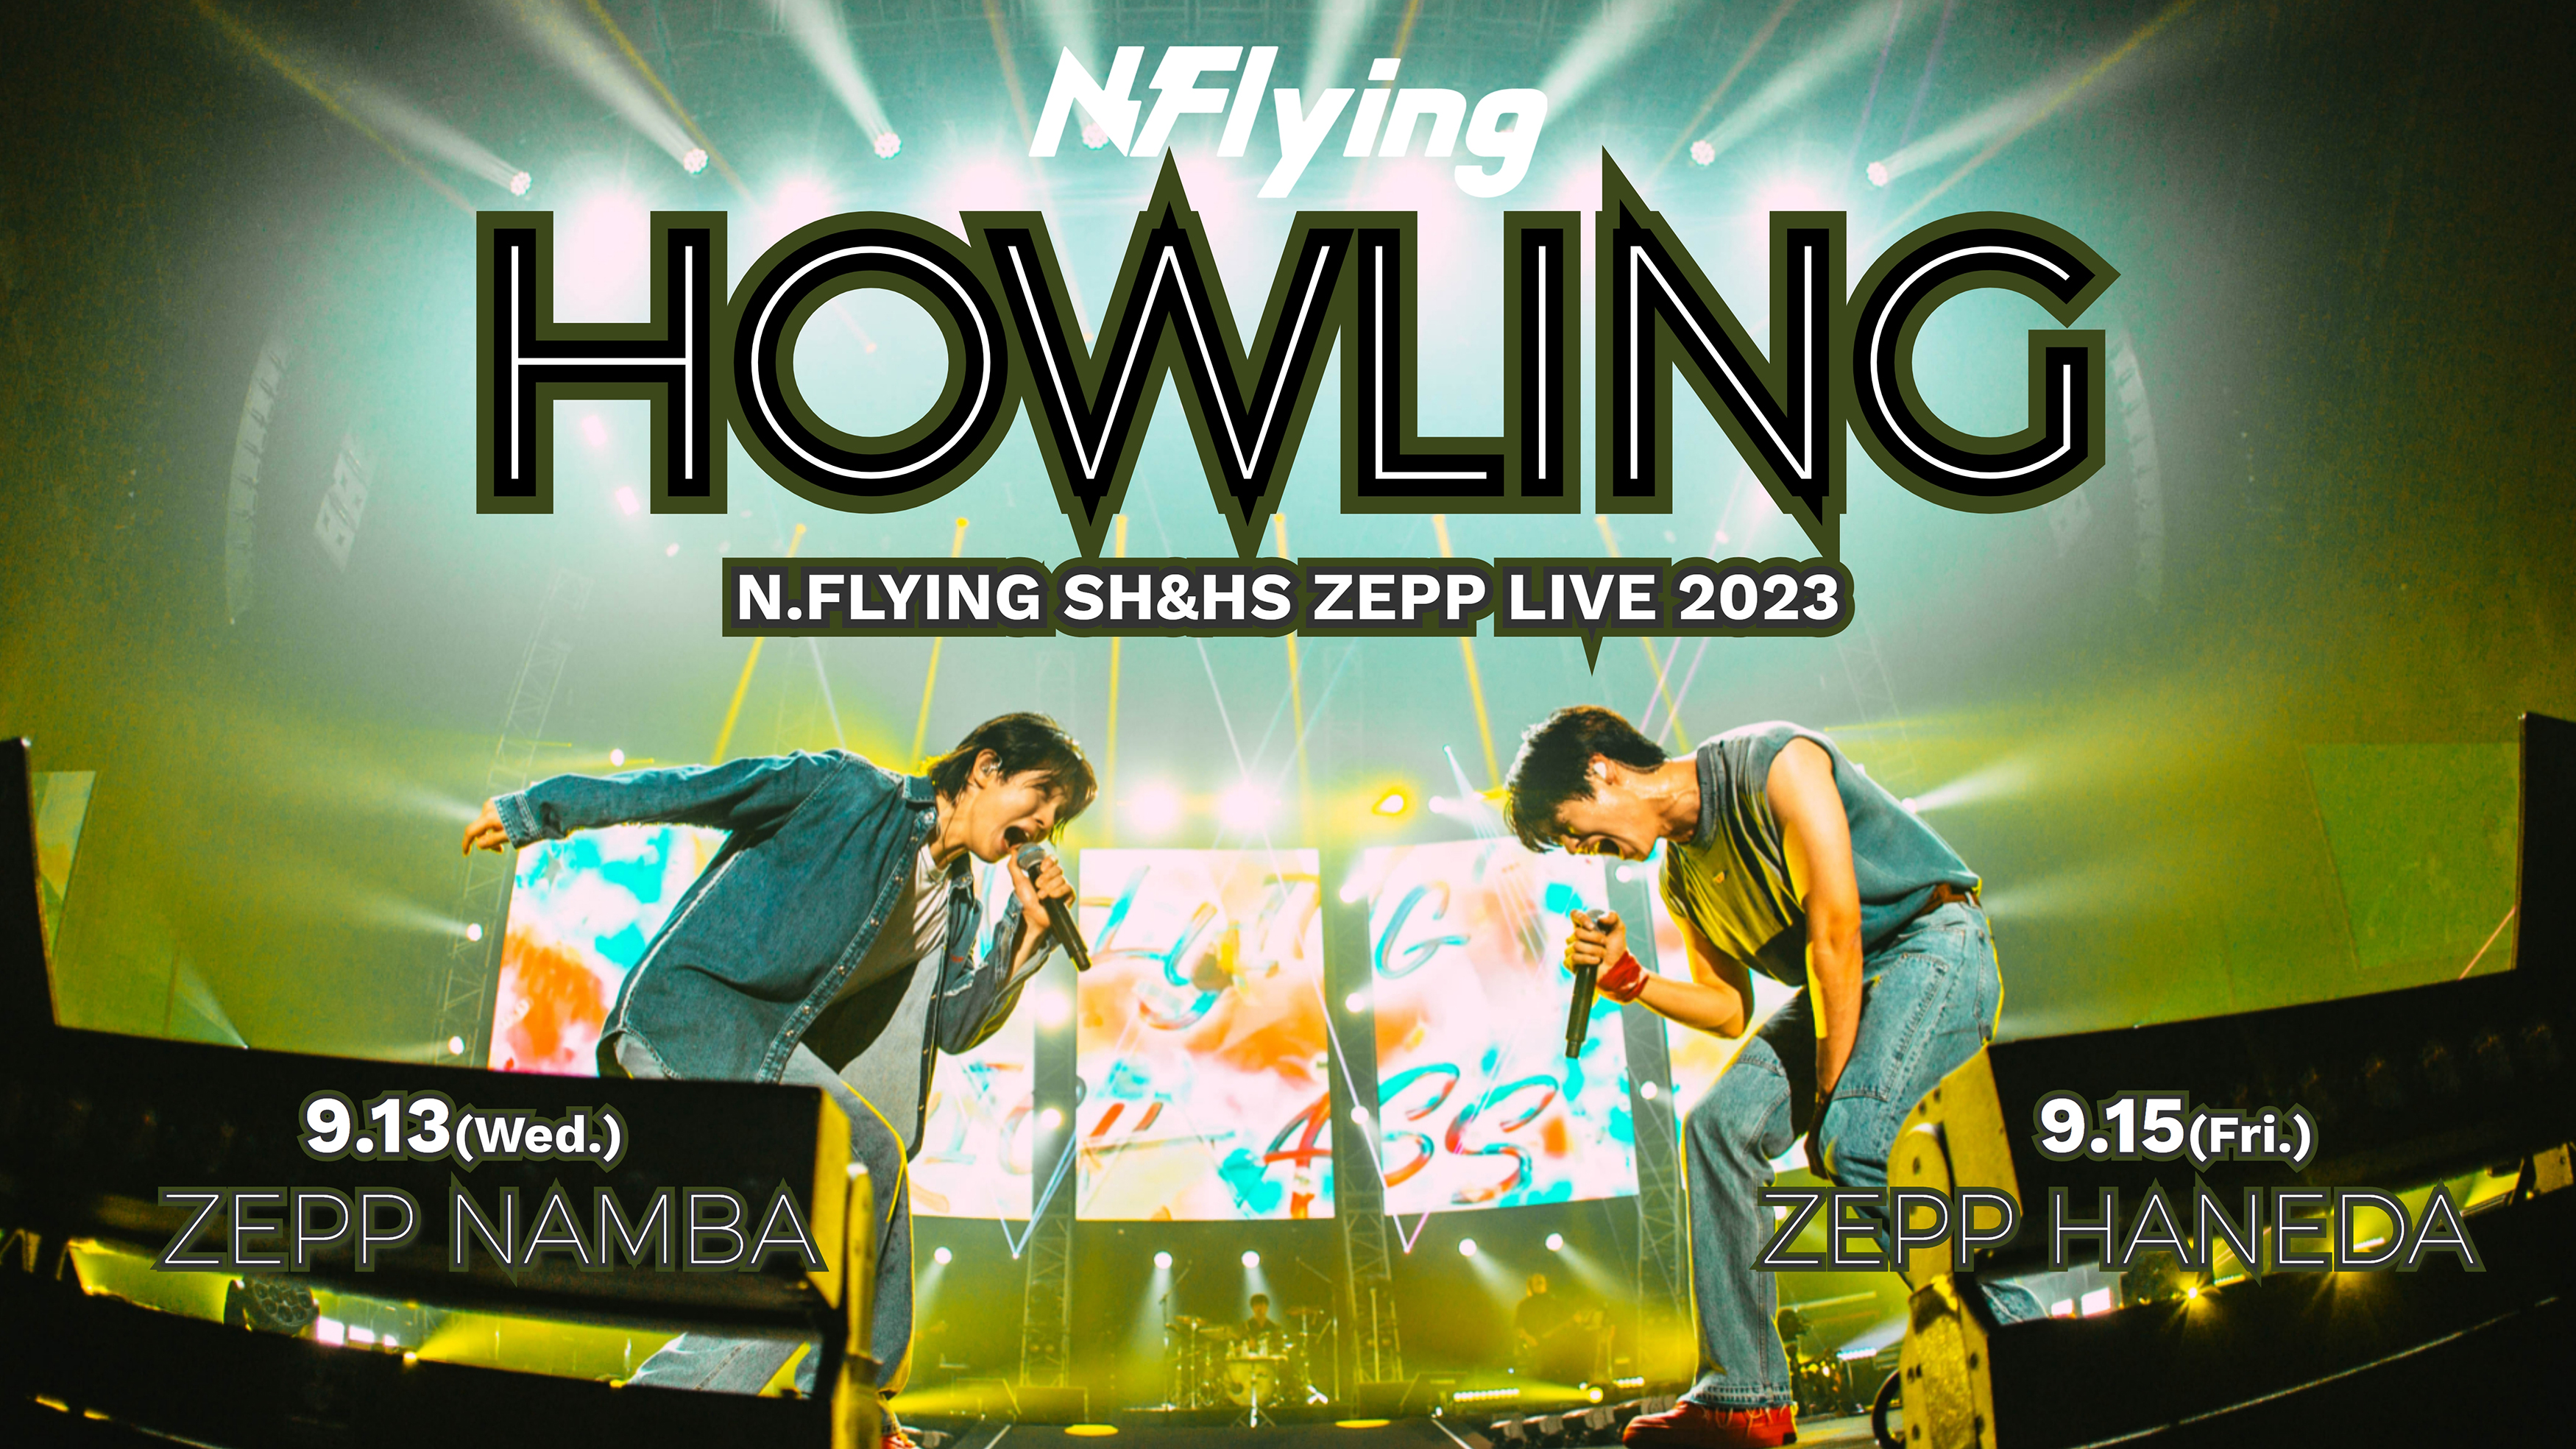 N.Flying SH&HS ZEPP LIVE 2023 "HOWLING"